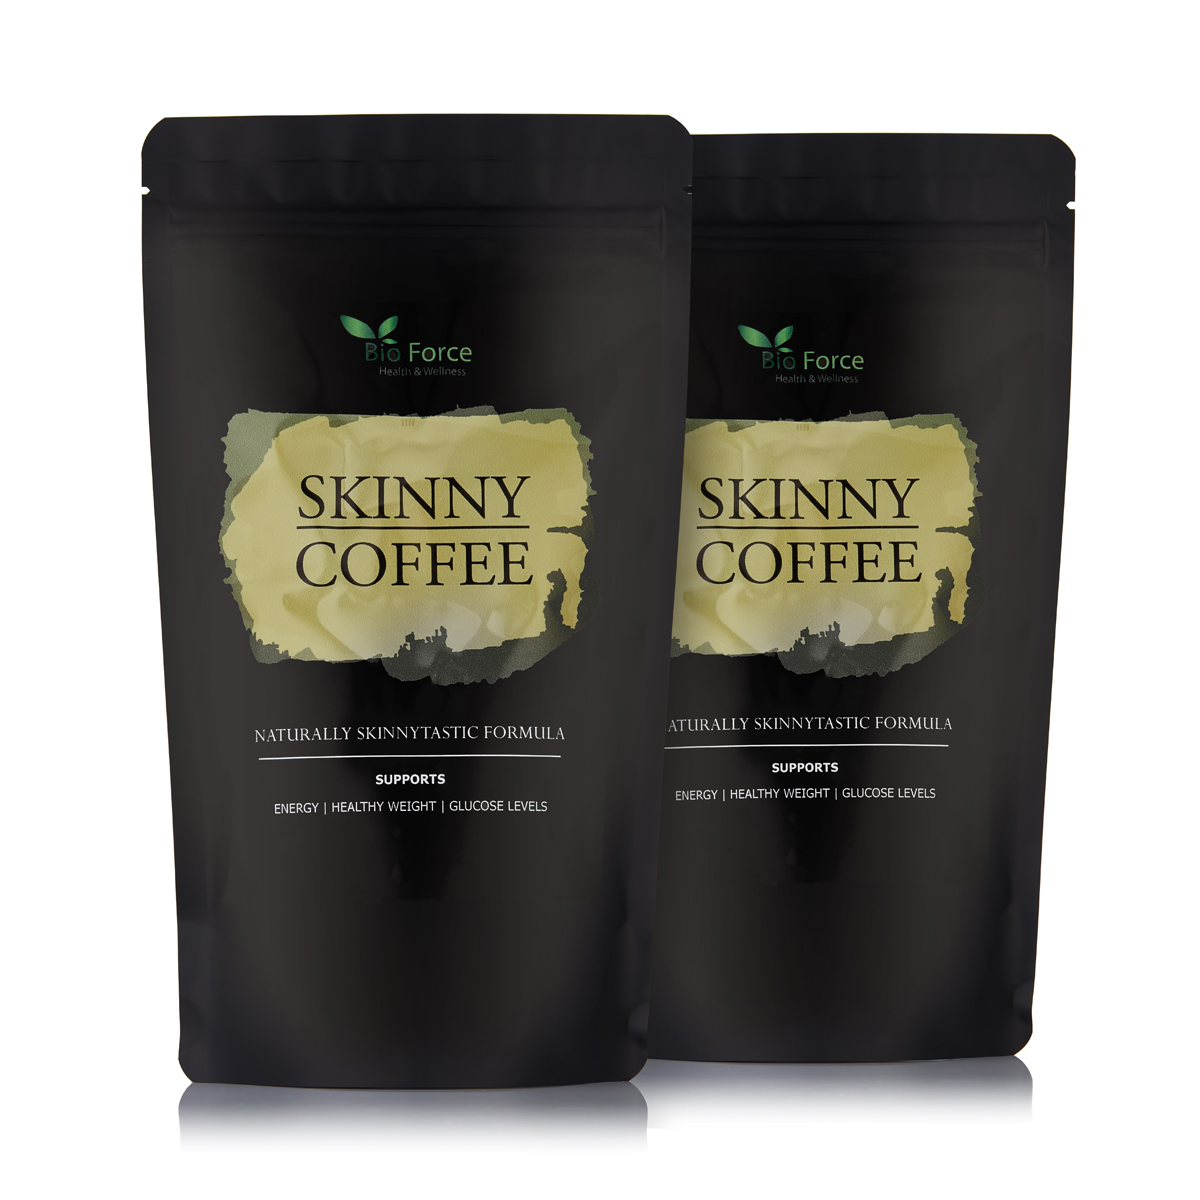 56 Day Program - Skinny Coffee South Africa